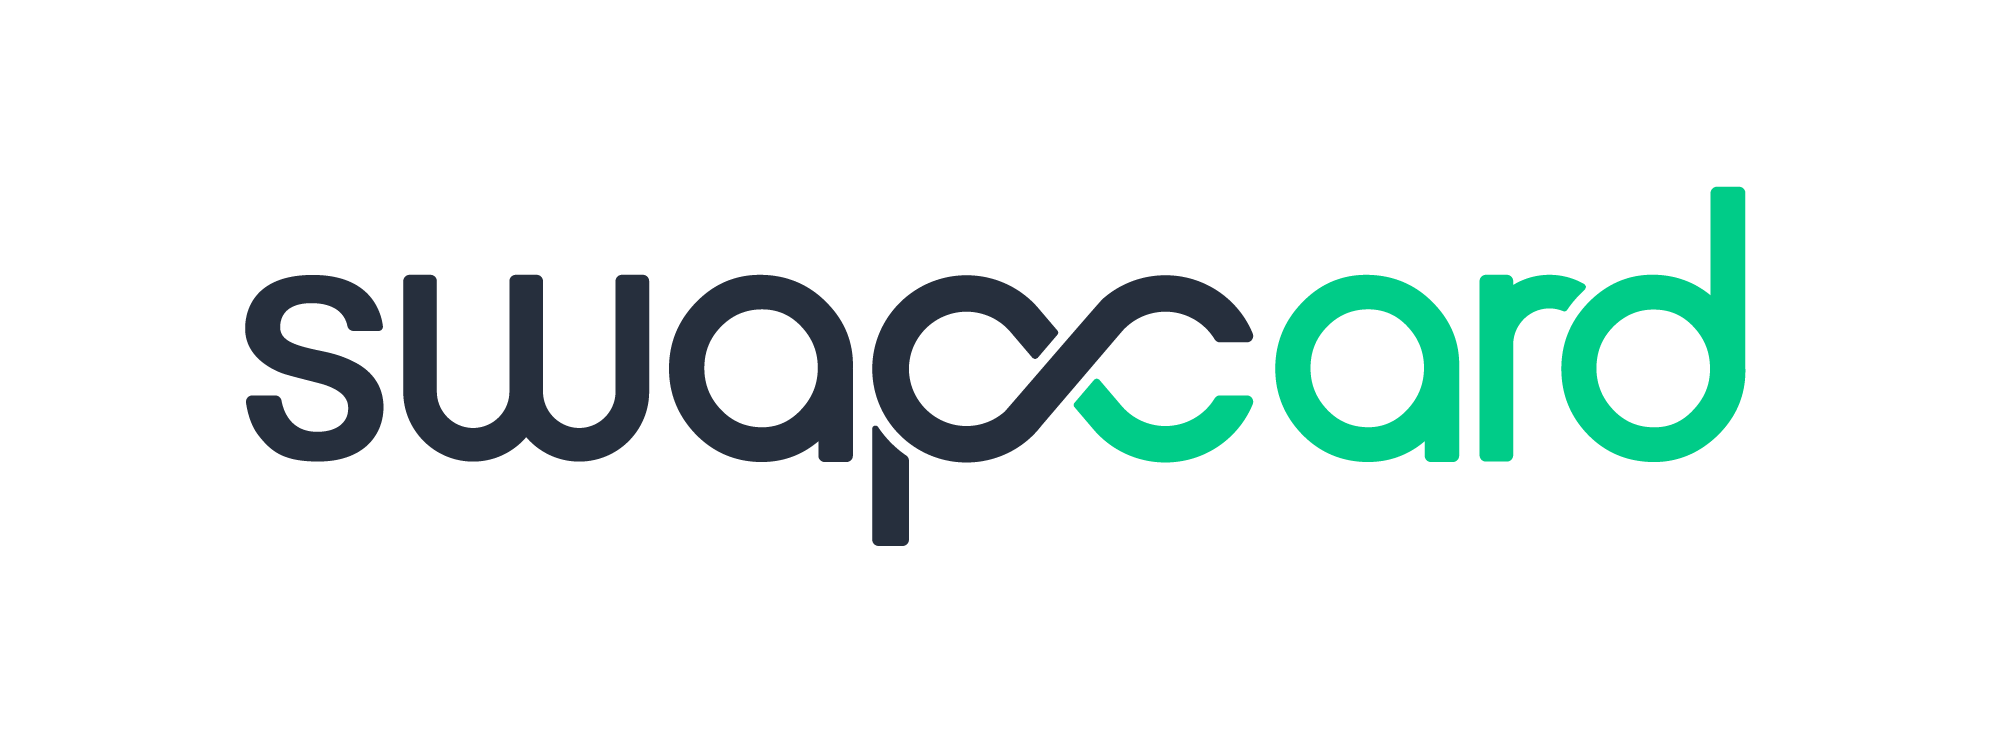 swapcard logo